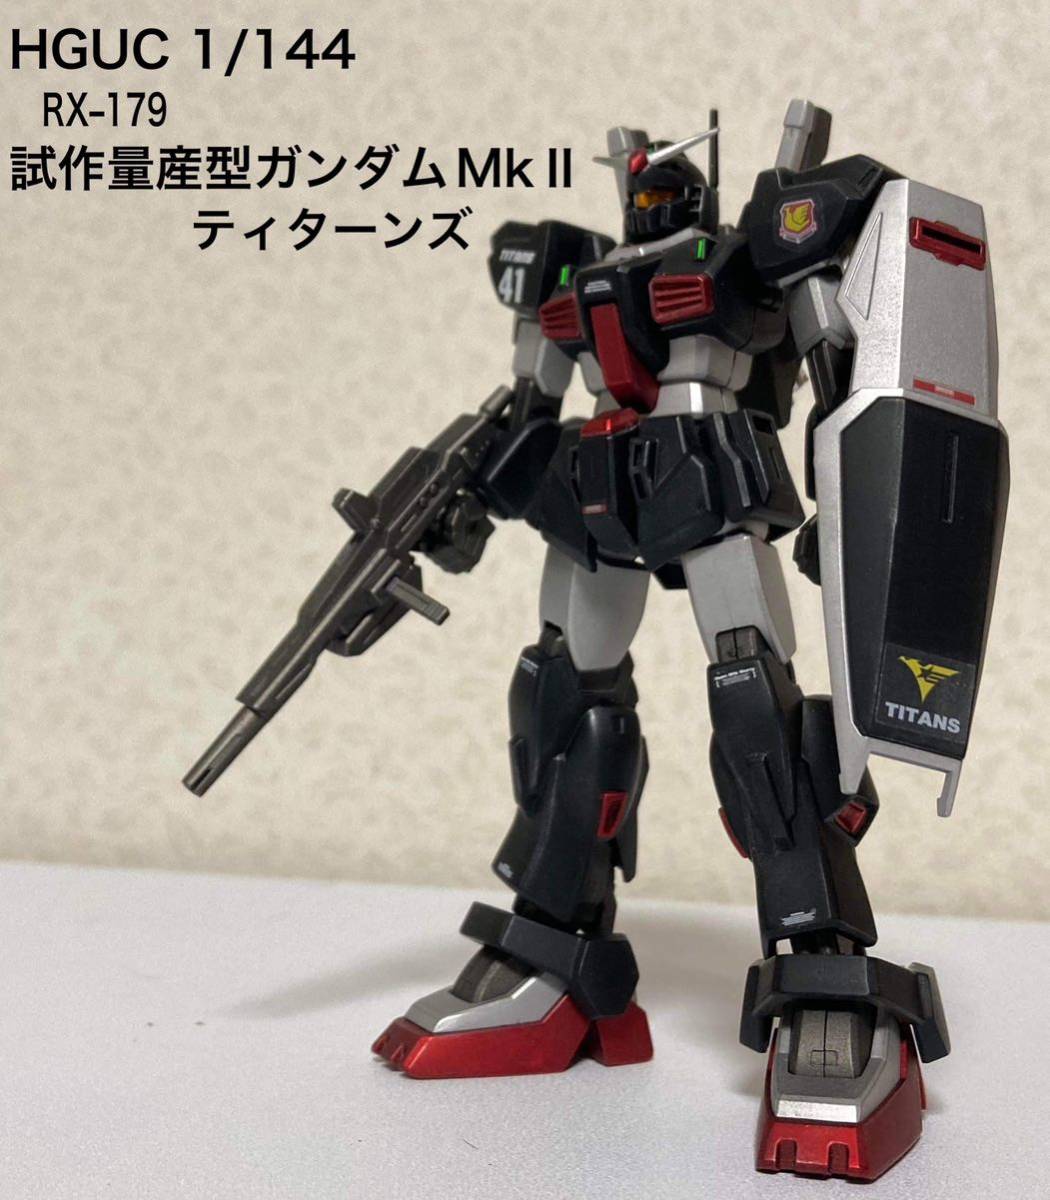 HGUC 1/144 RX-179 Prototype Mass-Produced Gundam MkⅡ Fully painted finished product, character, Gundam, Finished Product